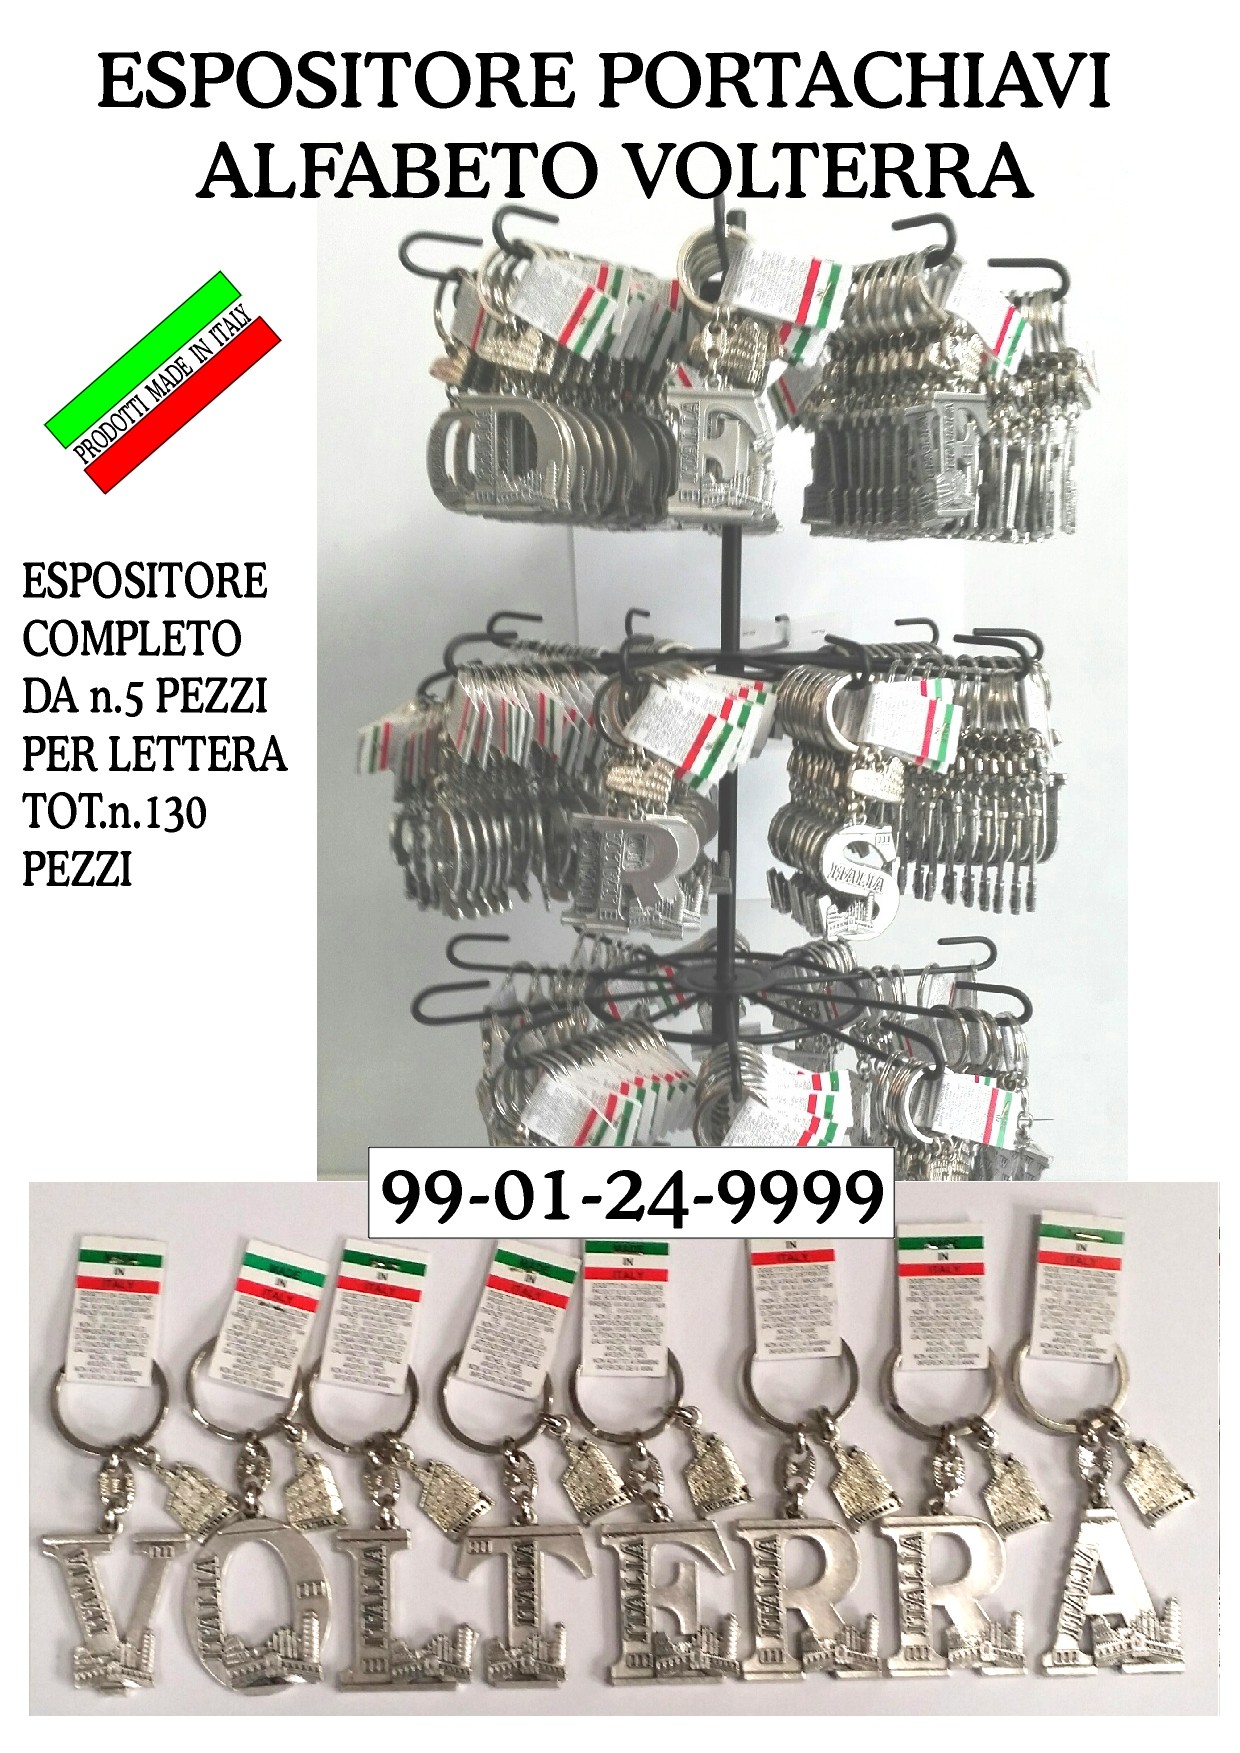 99-01-24-9999 Espositore Portachiavi Alfabeto Volterra n.5 Pezzi per Totale 130 